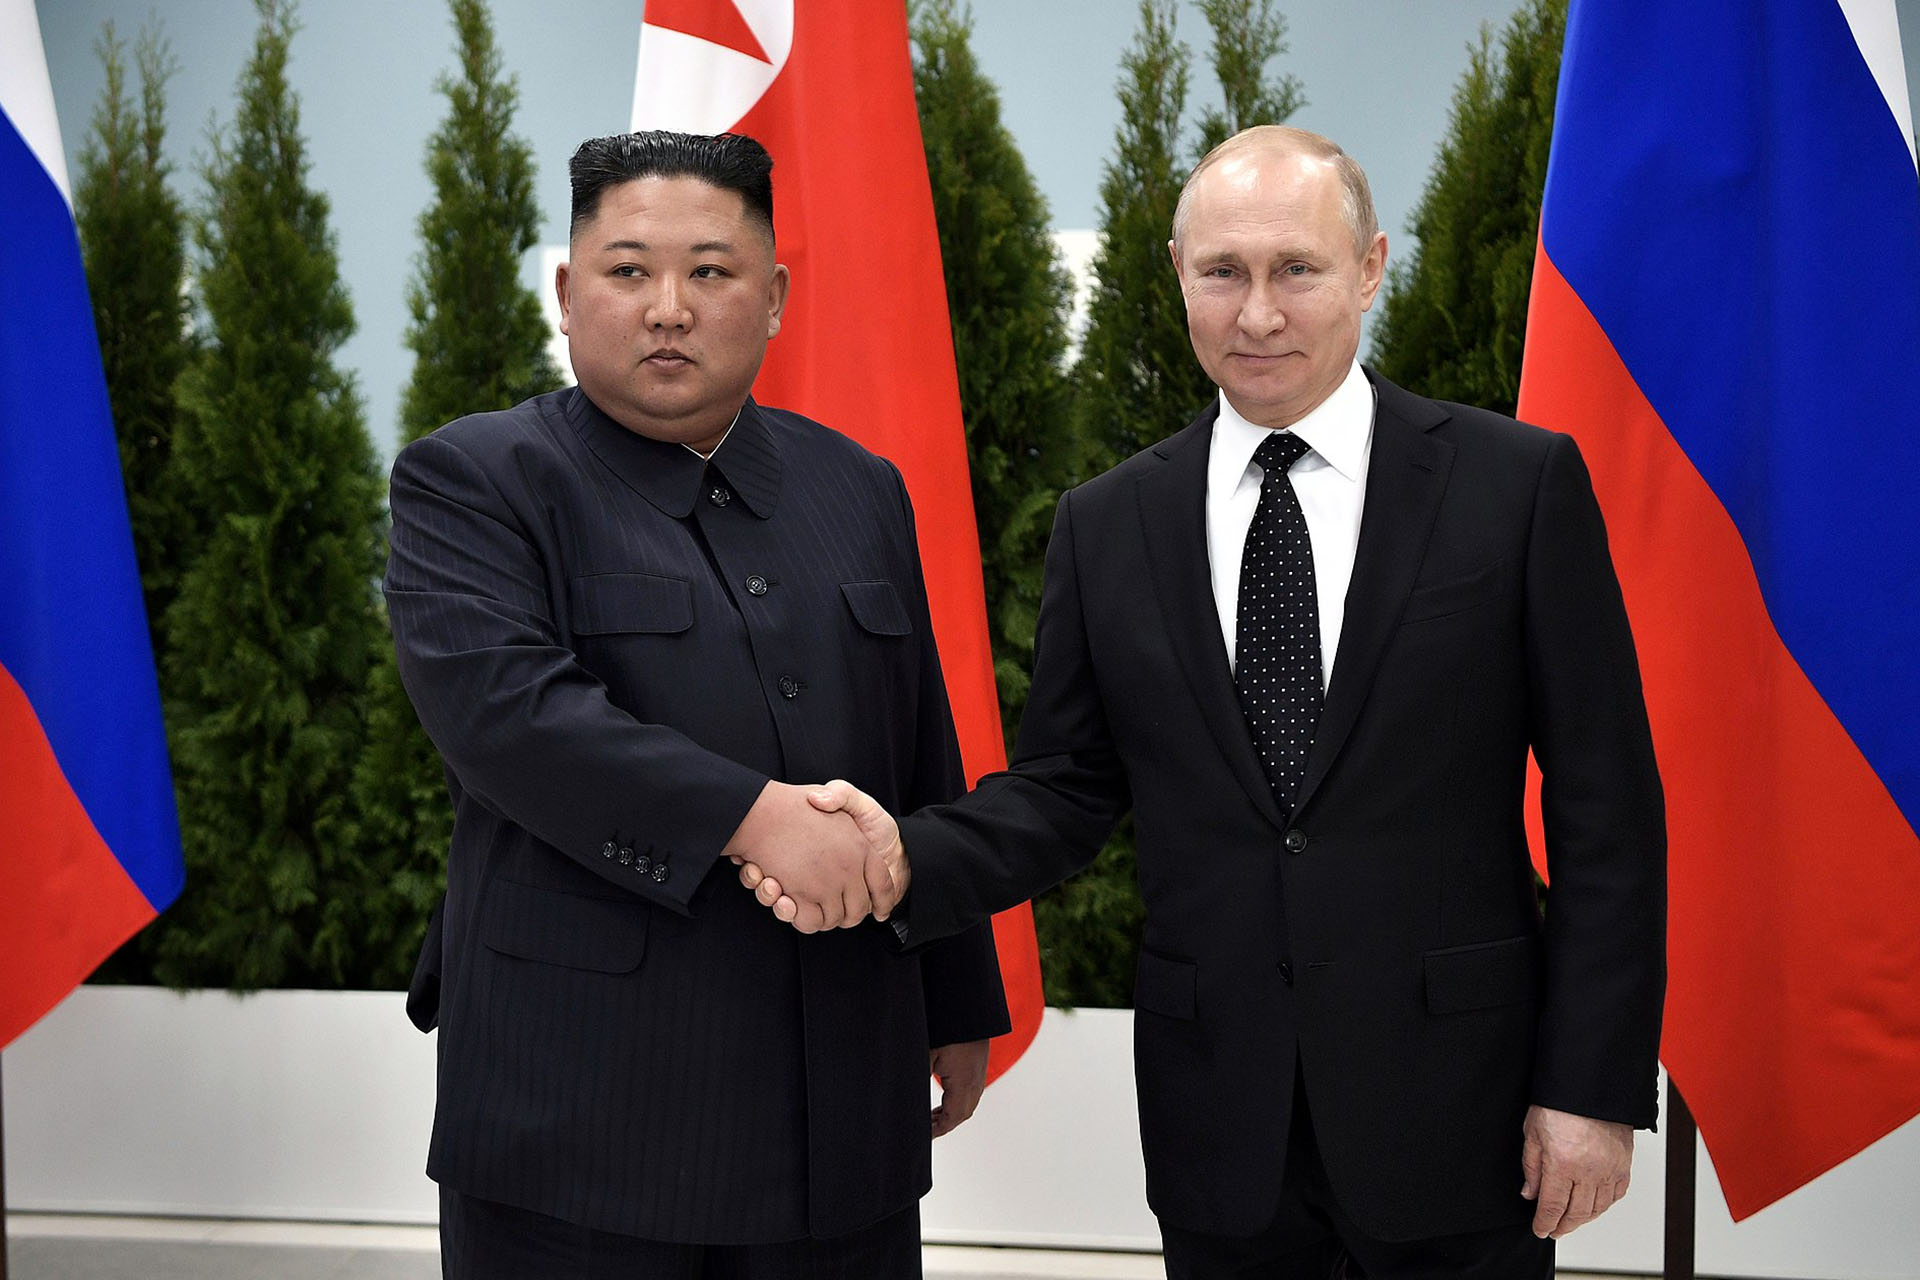 Bild: Kremlin.ru, Kim Jong-un and Vladimir Putin (2019-04-25), CC BY 4.0, via Wikimedia Commons (Bildgröße geändert)